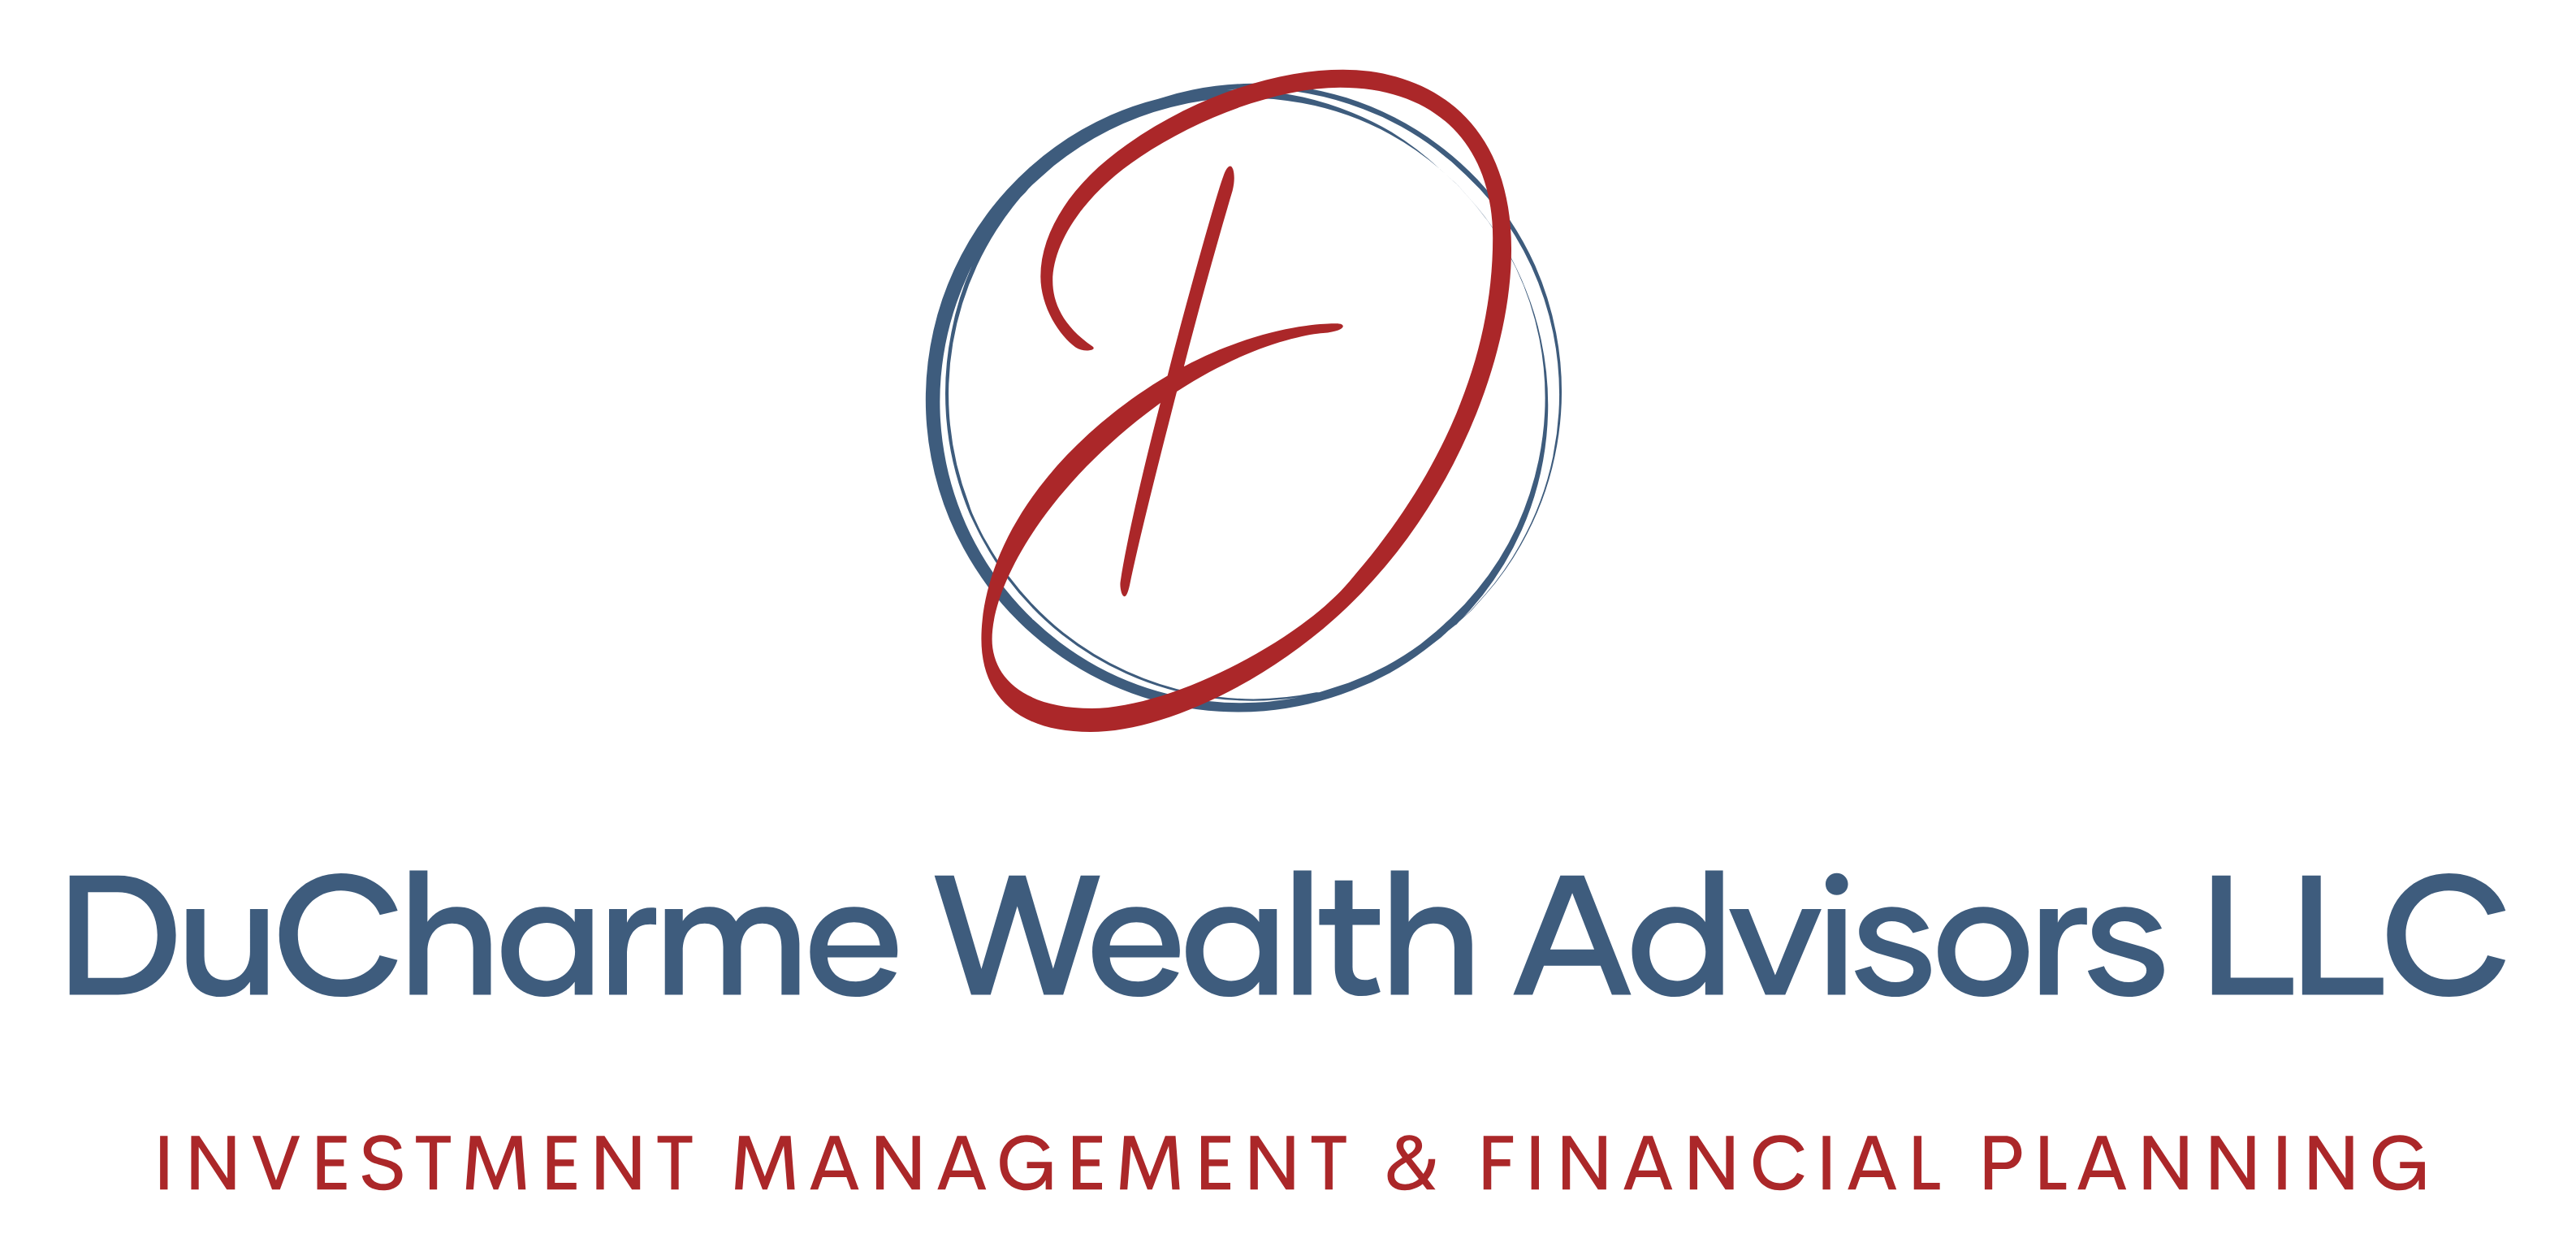 DuCharme Wealth Advisors, LLC